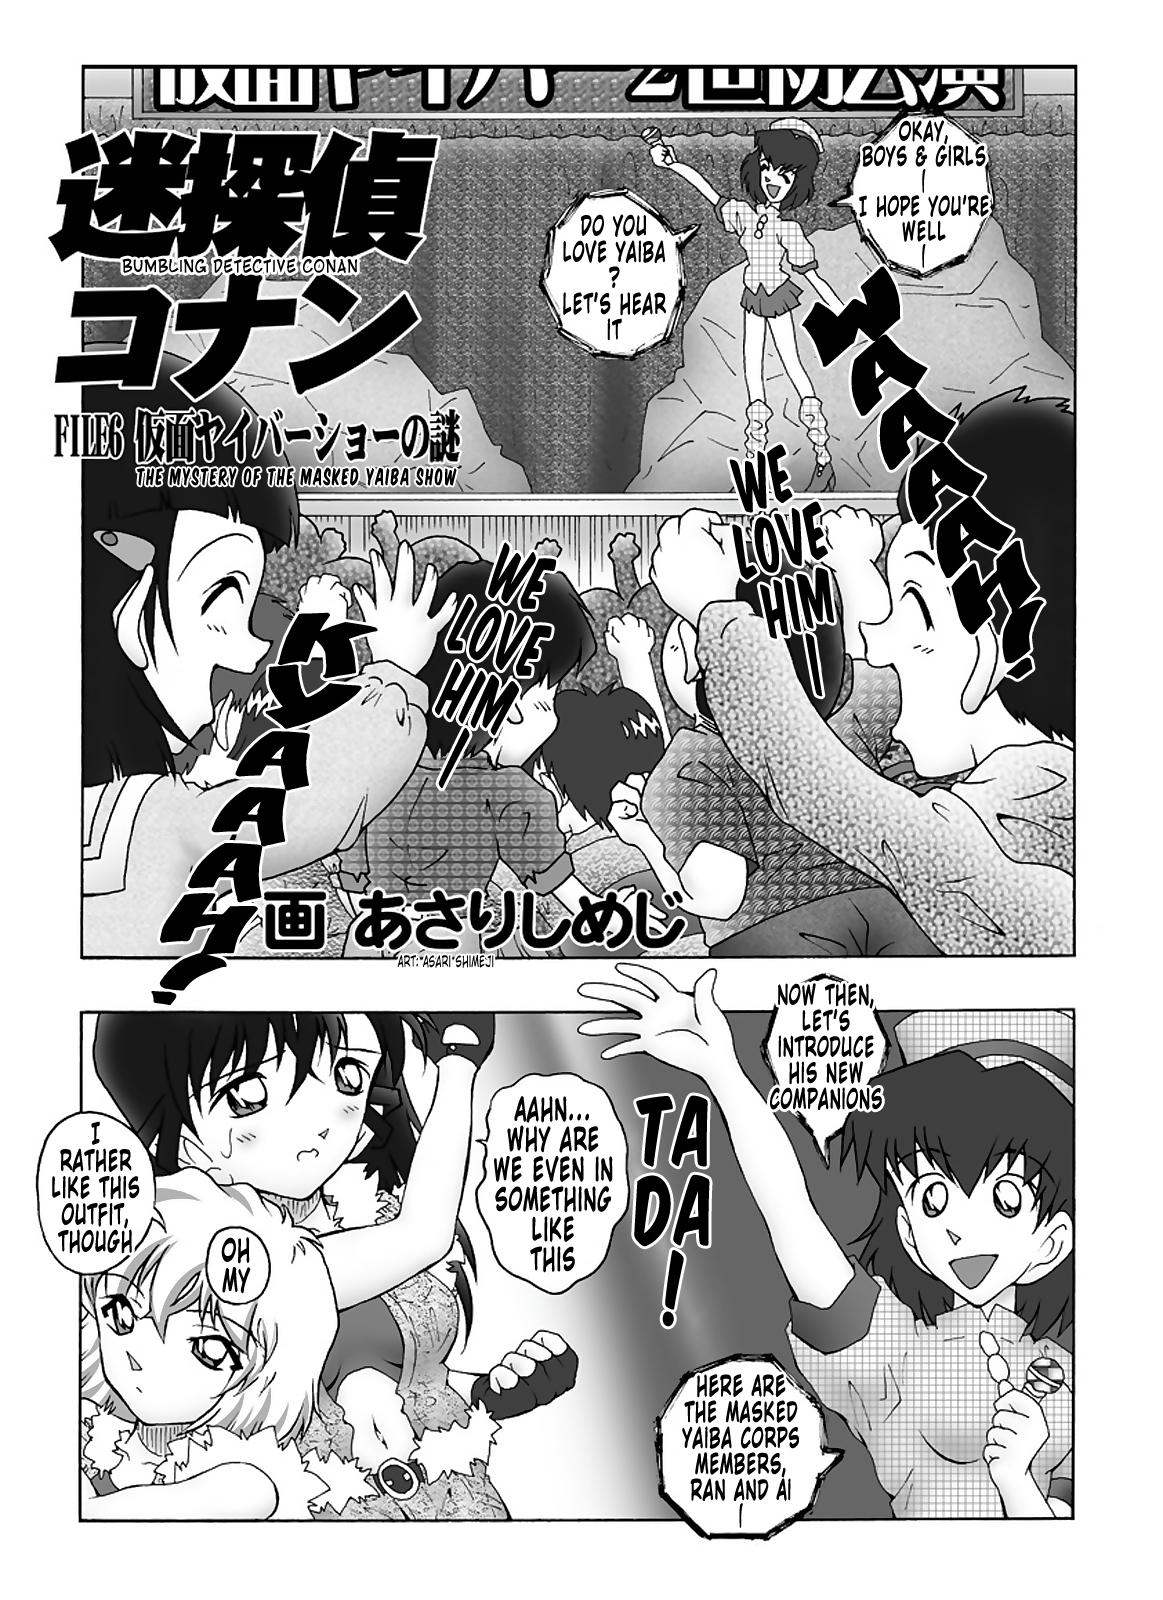 Sofa Bumbling Detective Conan - File 6: The Mystery Of The Masked Yaiba Show - Detective conan Madura - Page 4